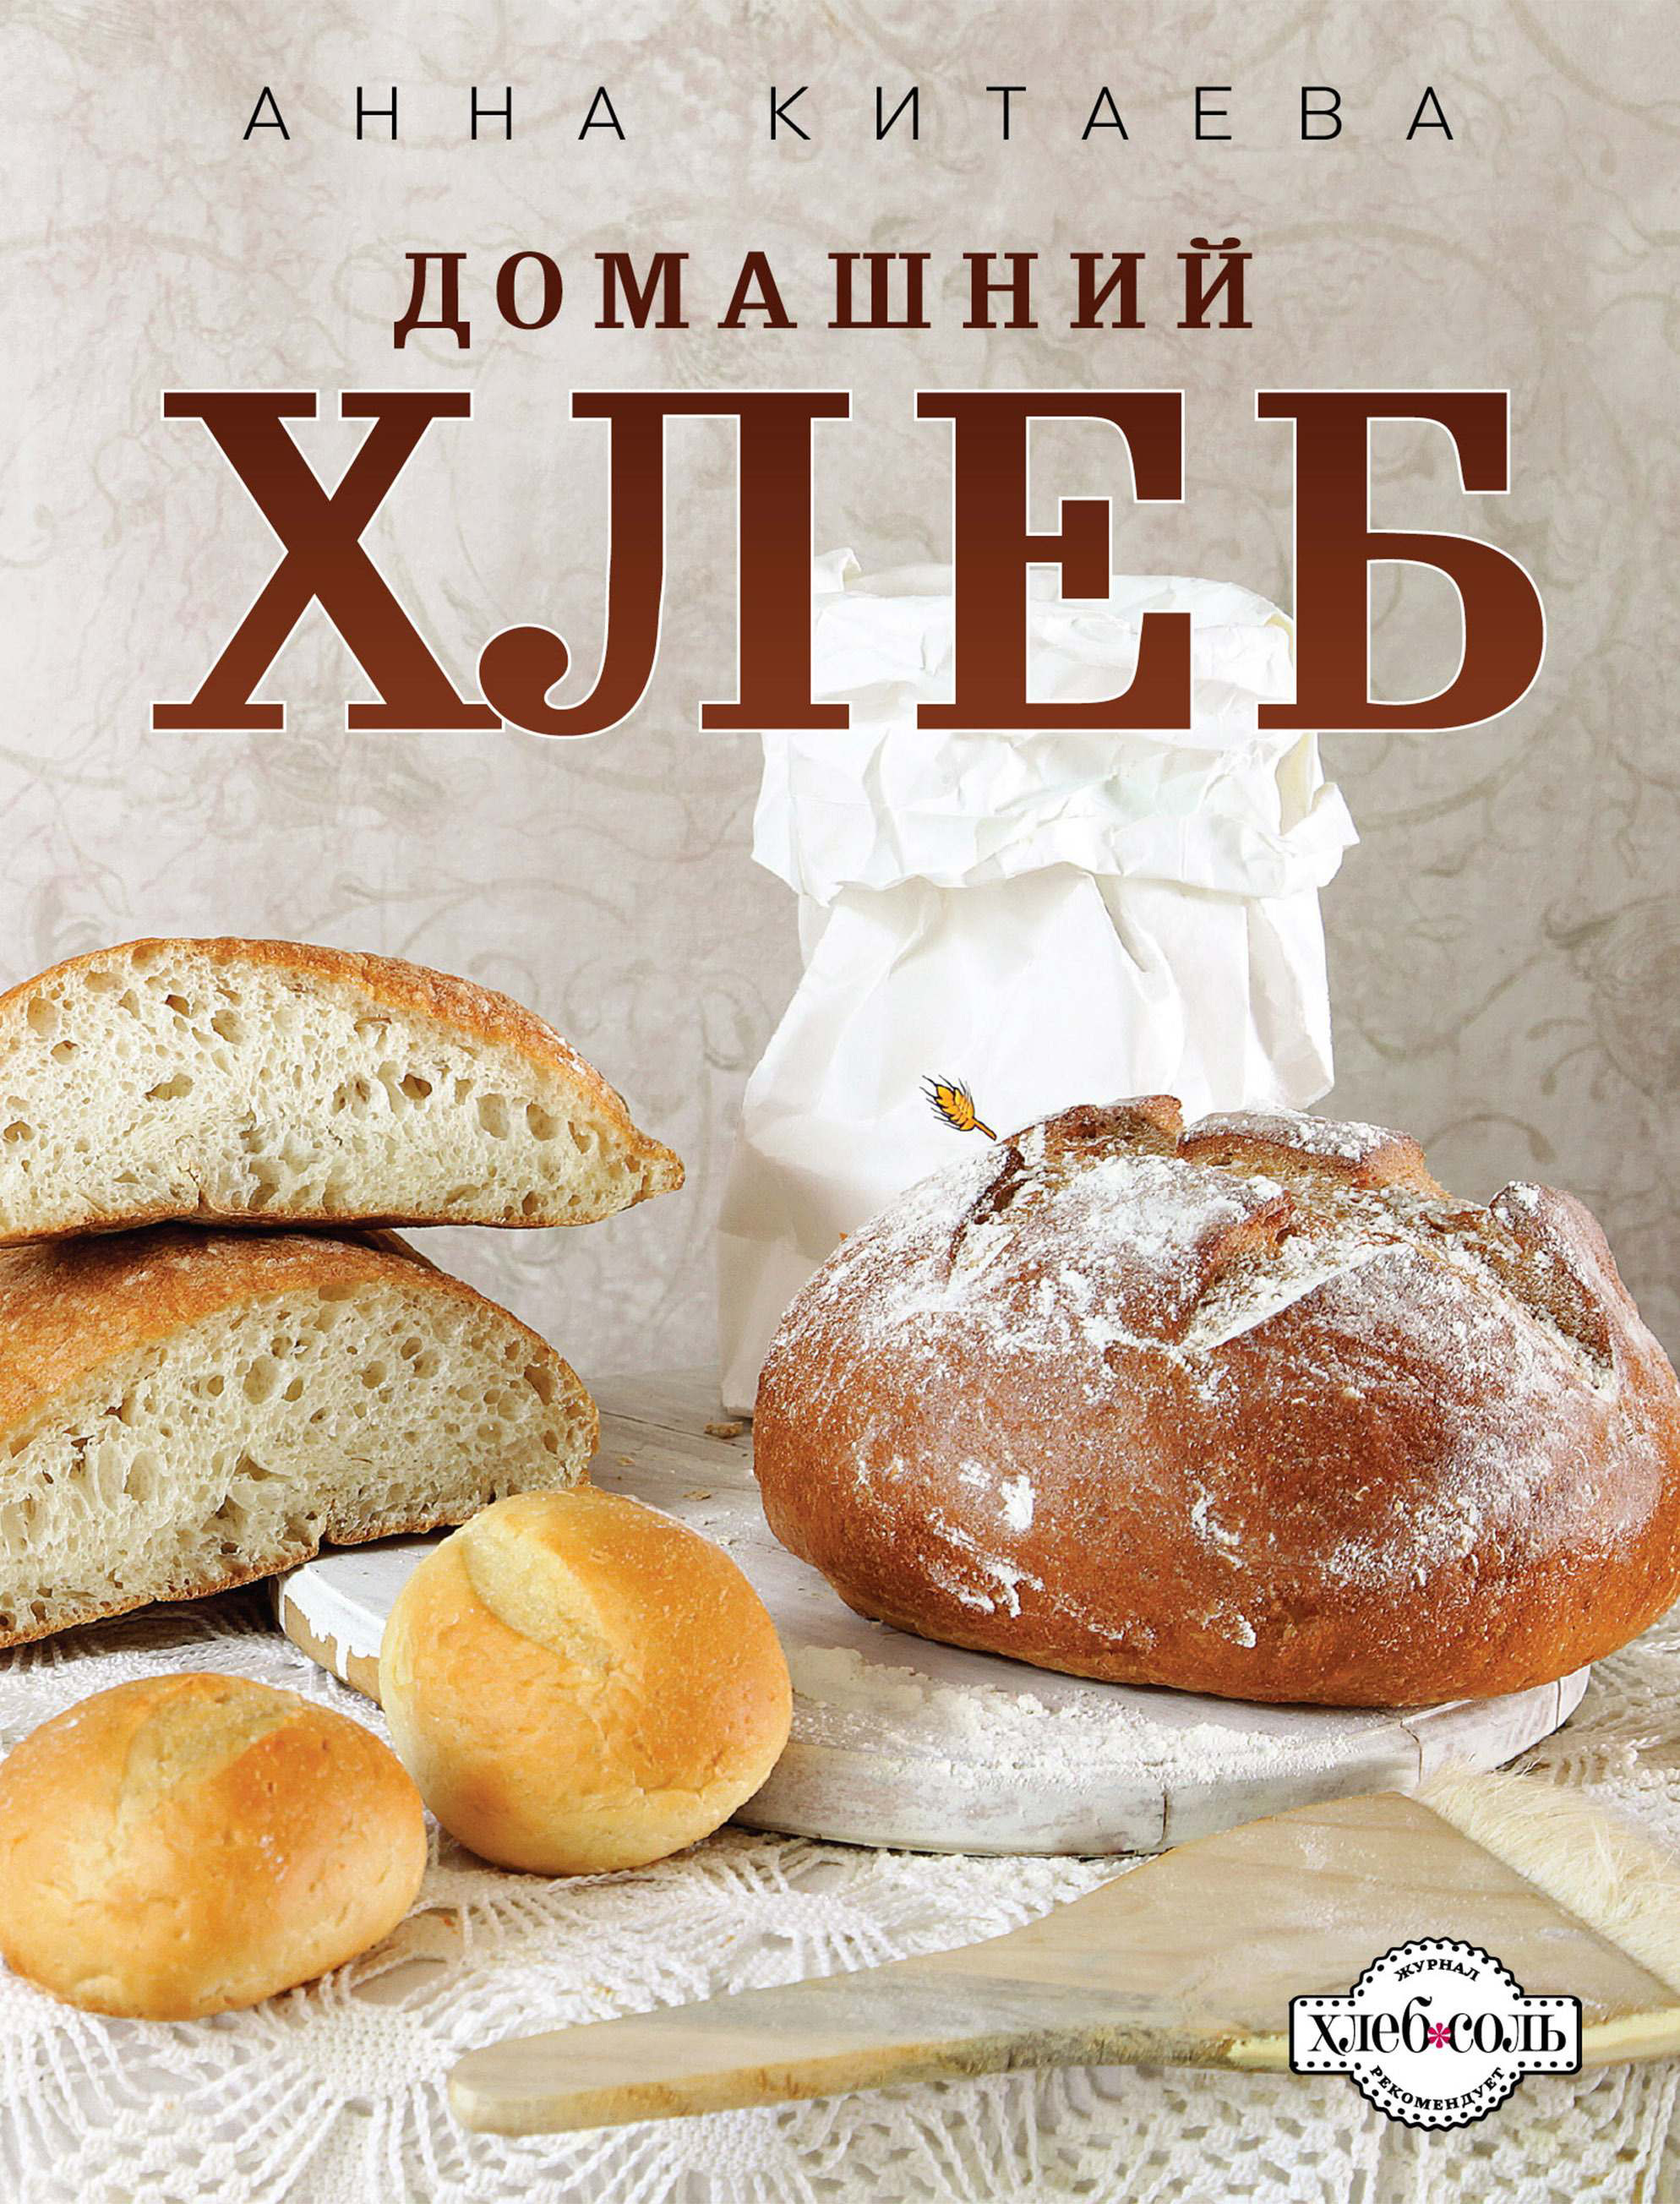 Книги про хлеб. Книги о хлебе. Домашний хлеб книга. Книжки про хлеб.